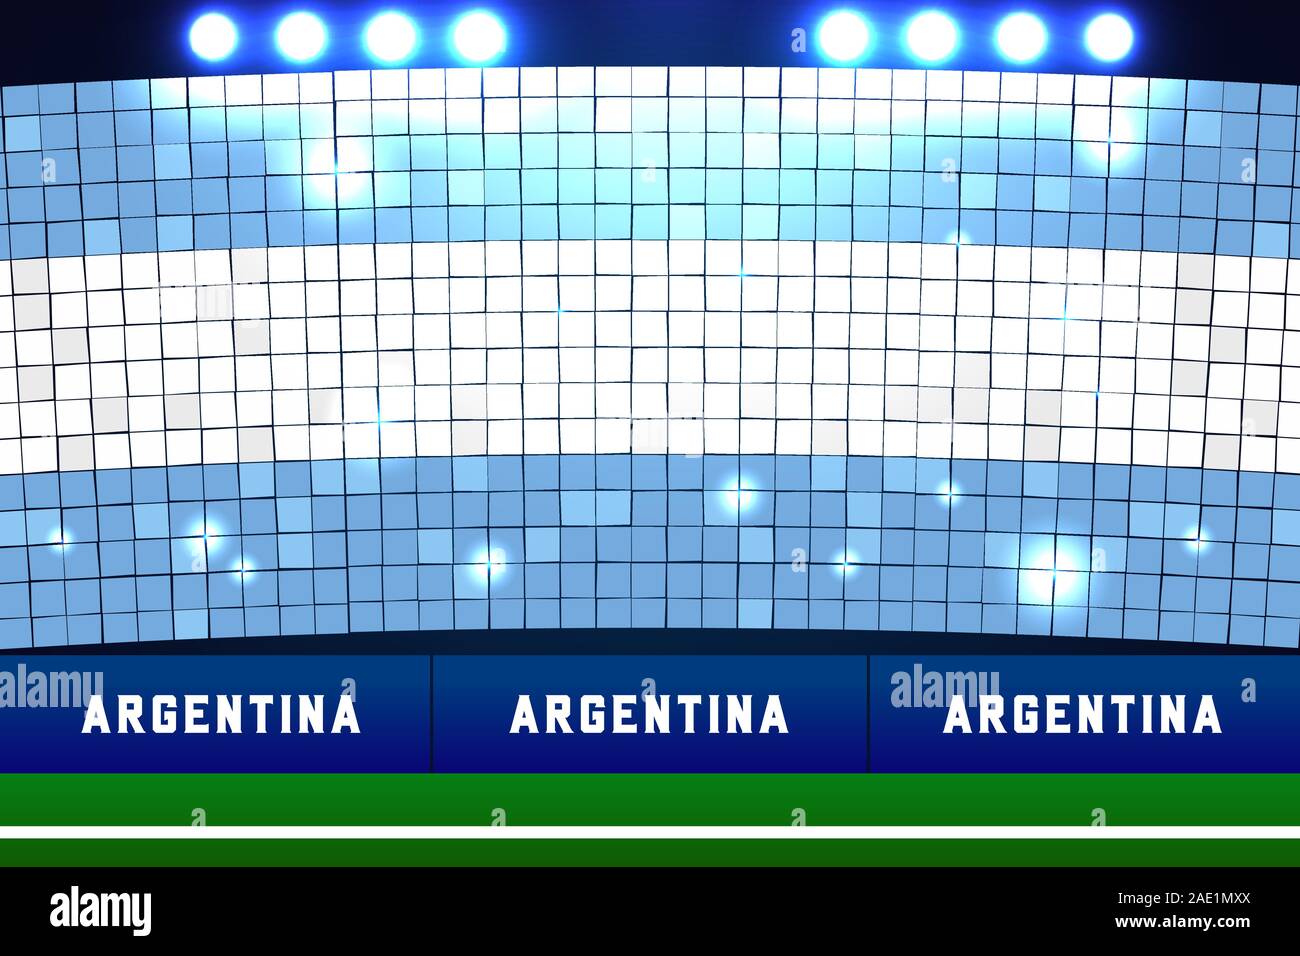 Argentina flag card stunts. Argentina soccer or football stadium background. Stock Vector